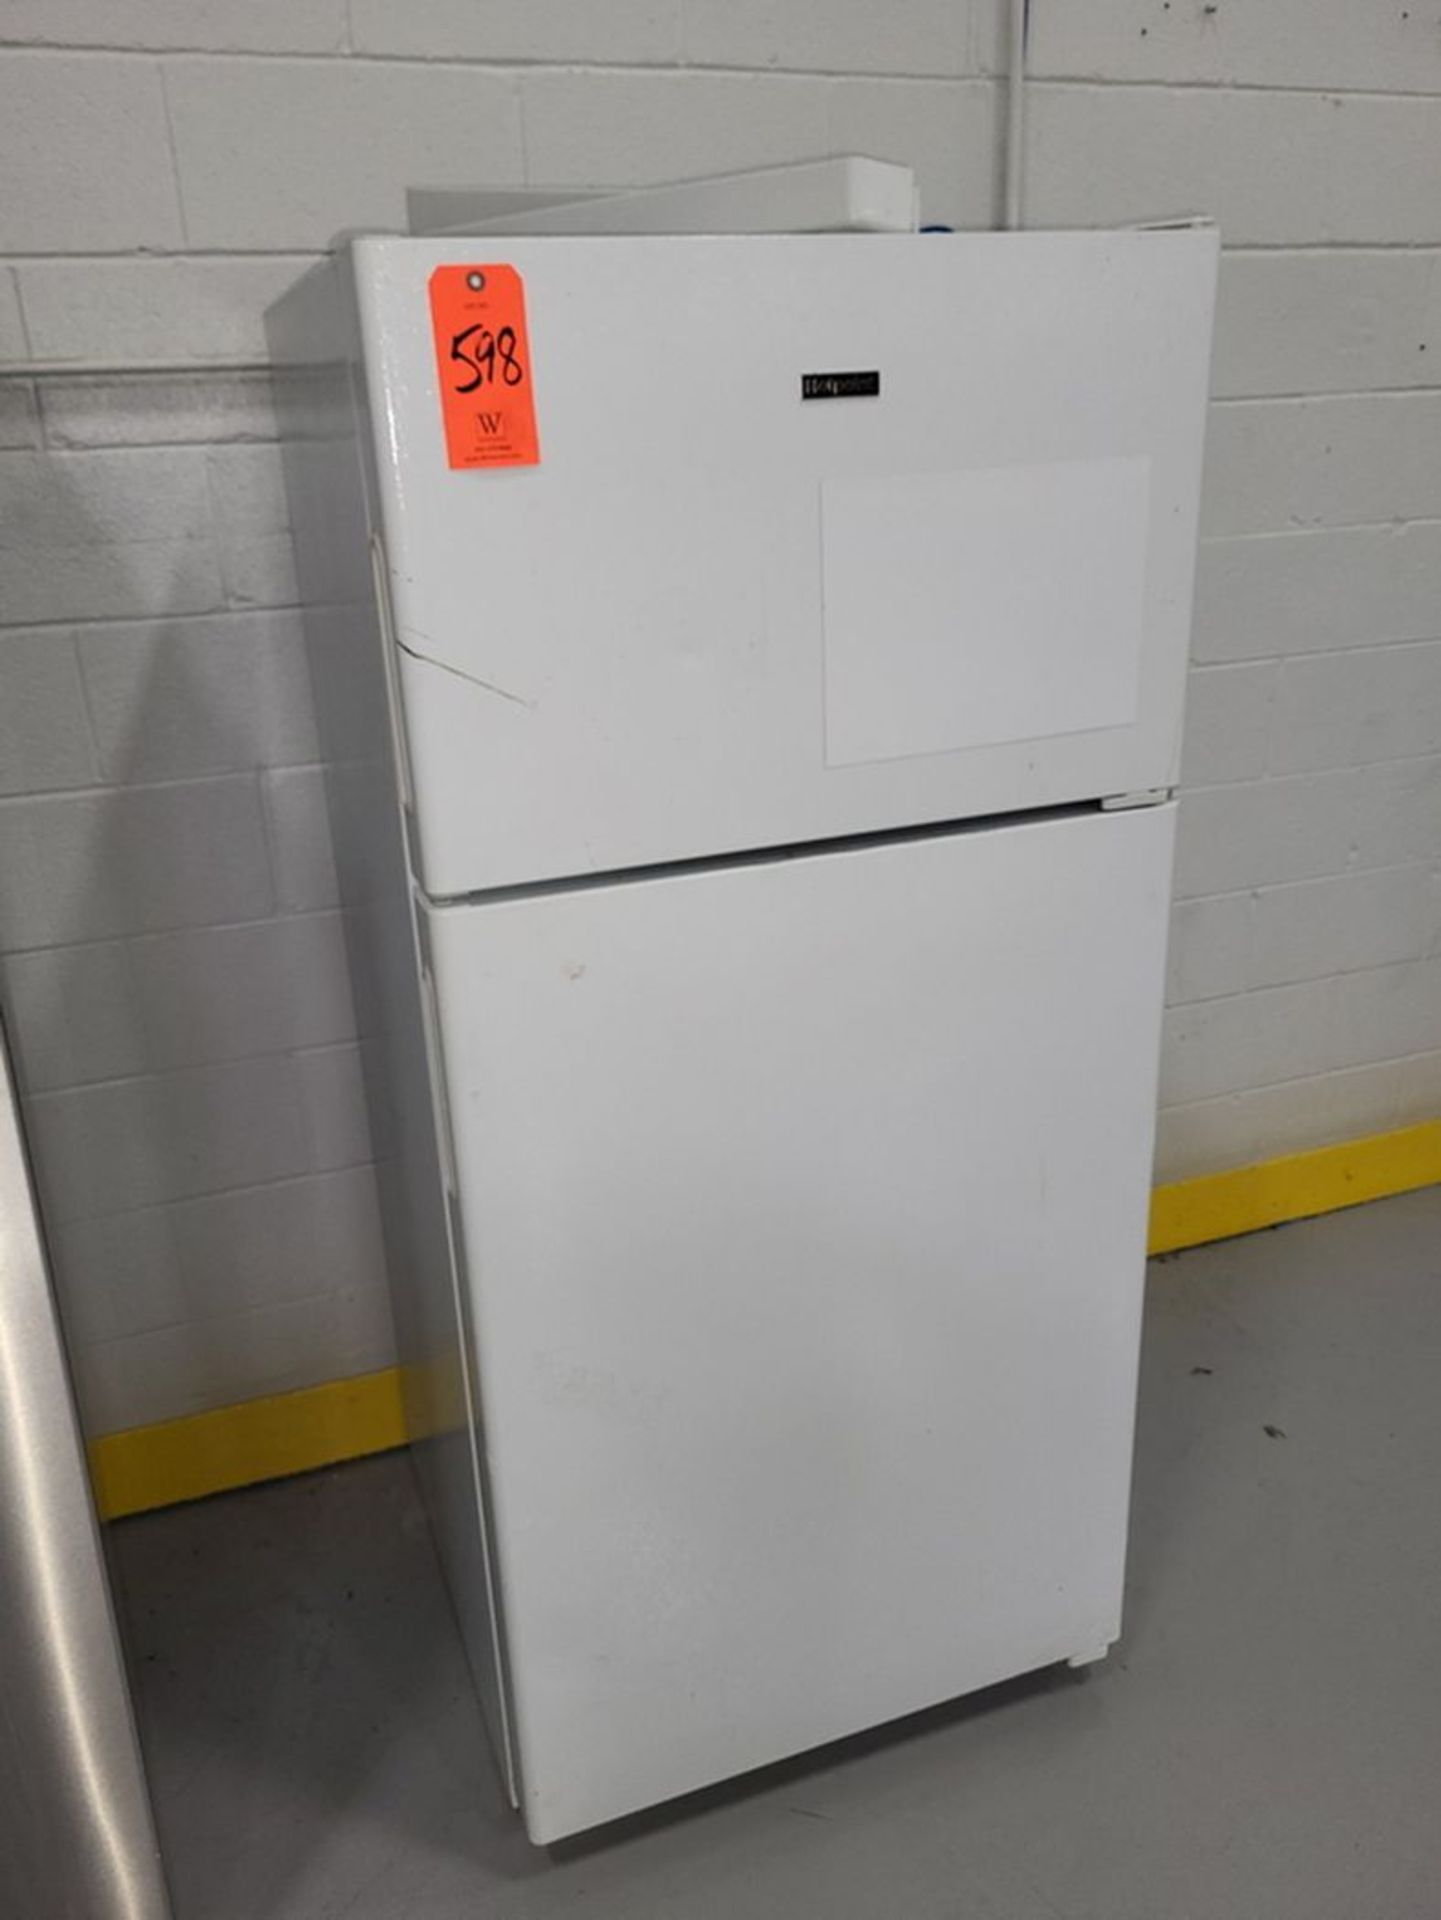 Hotpoint Shop Refrigerator/Freezer, S/N: DM753105; R-134a Refrigerant, 120-Volt